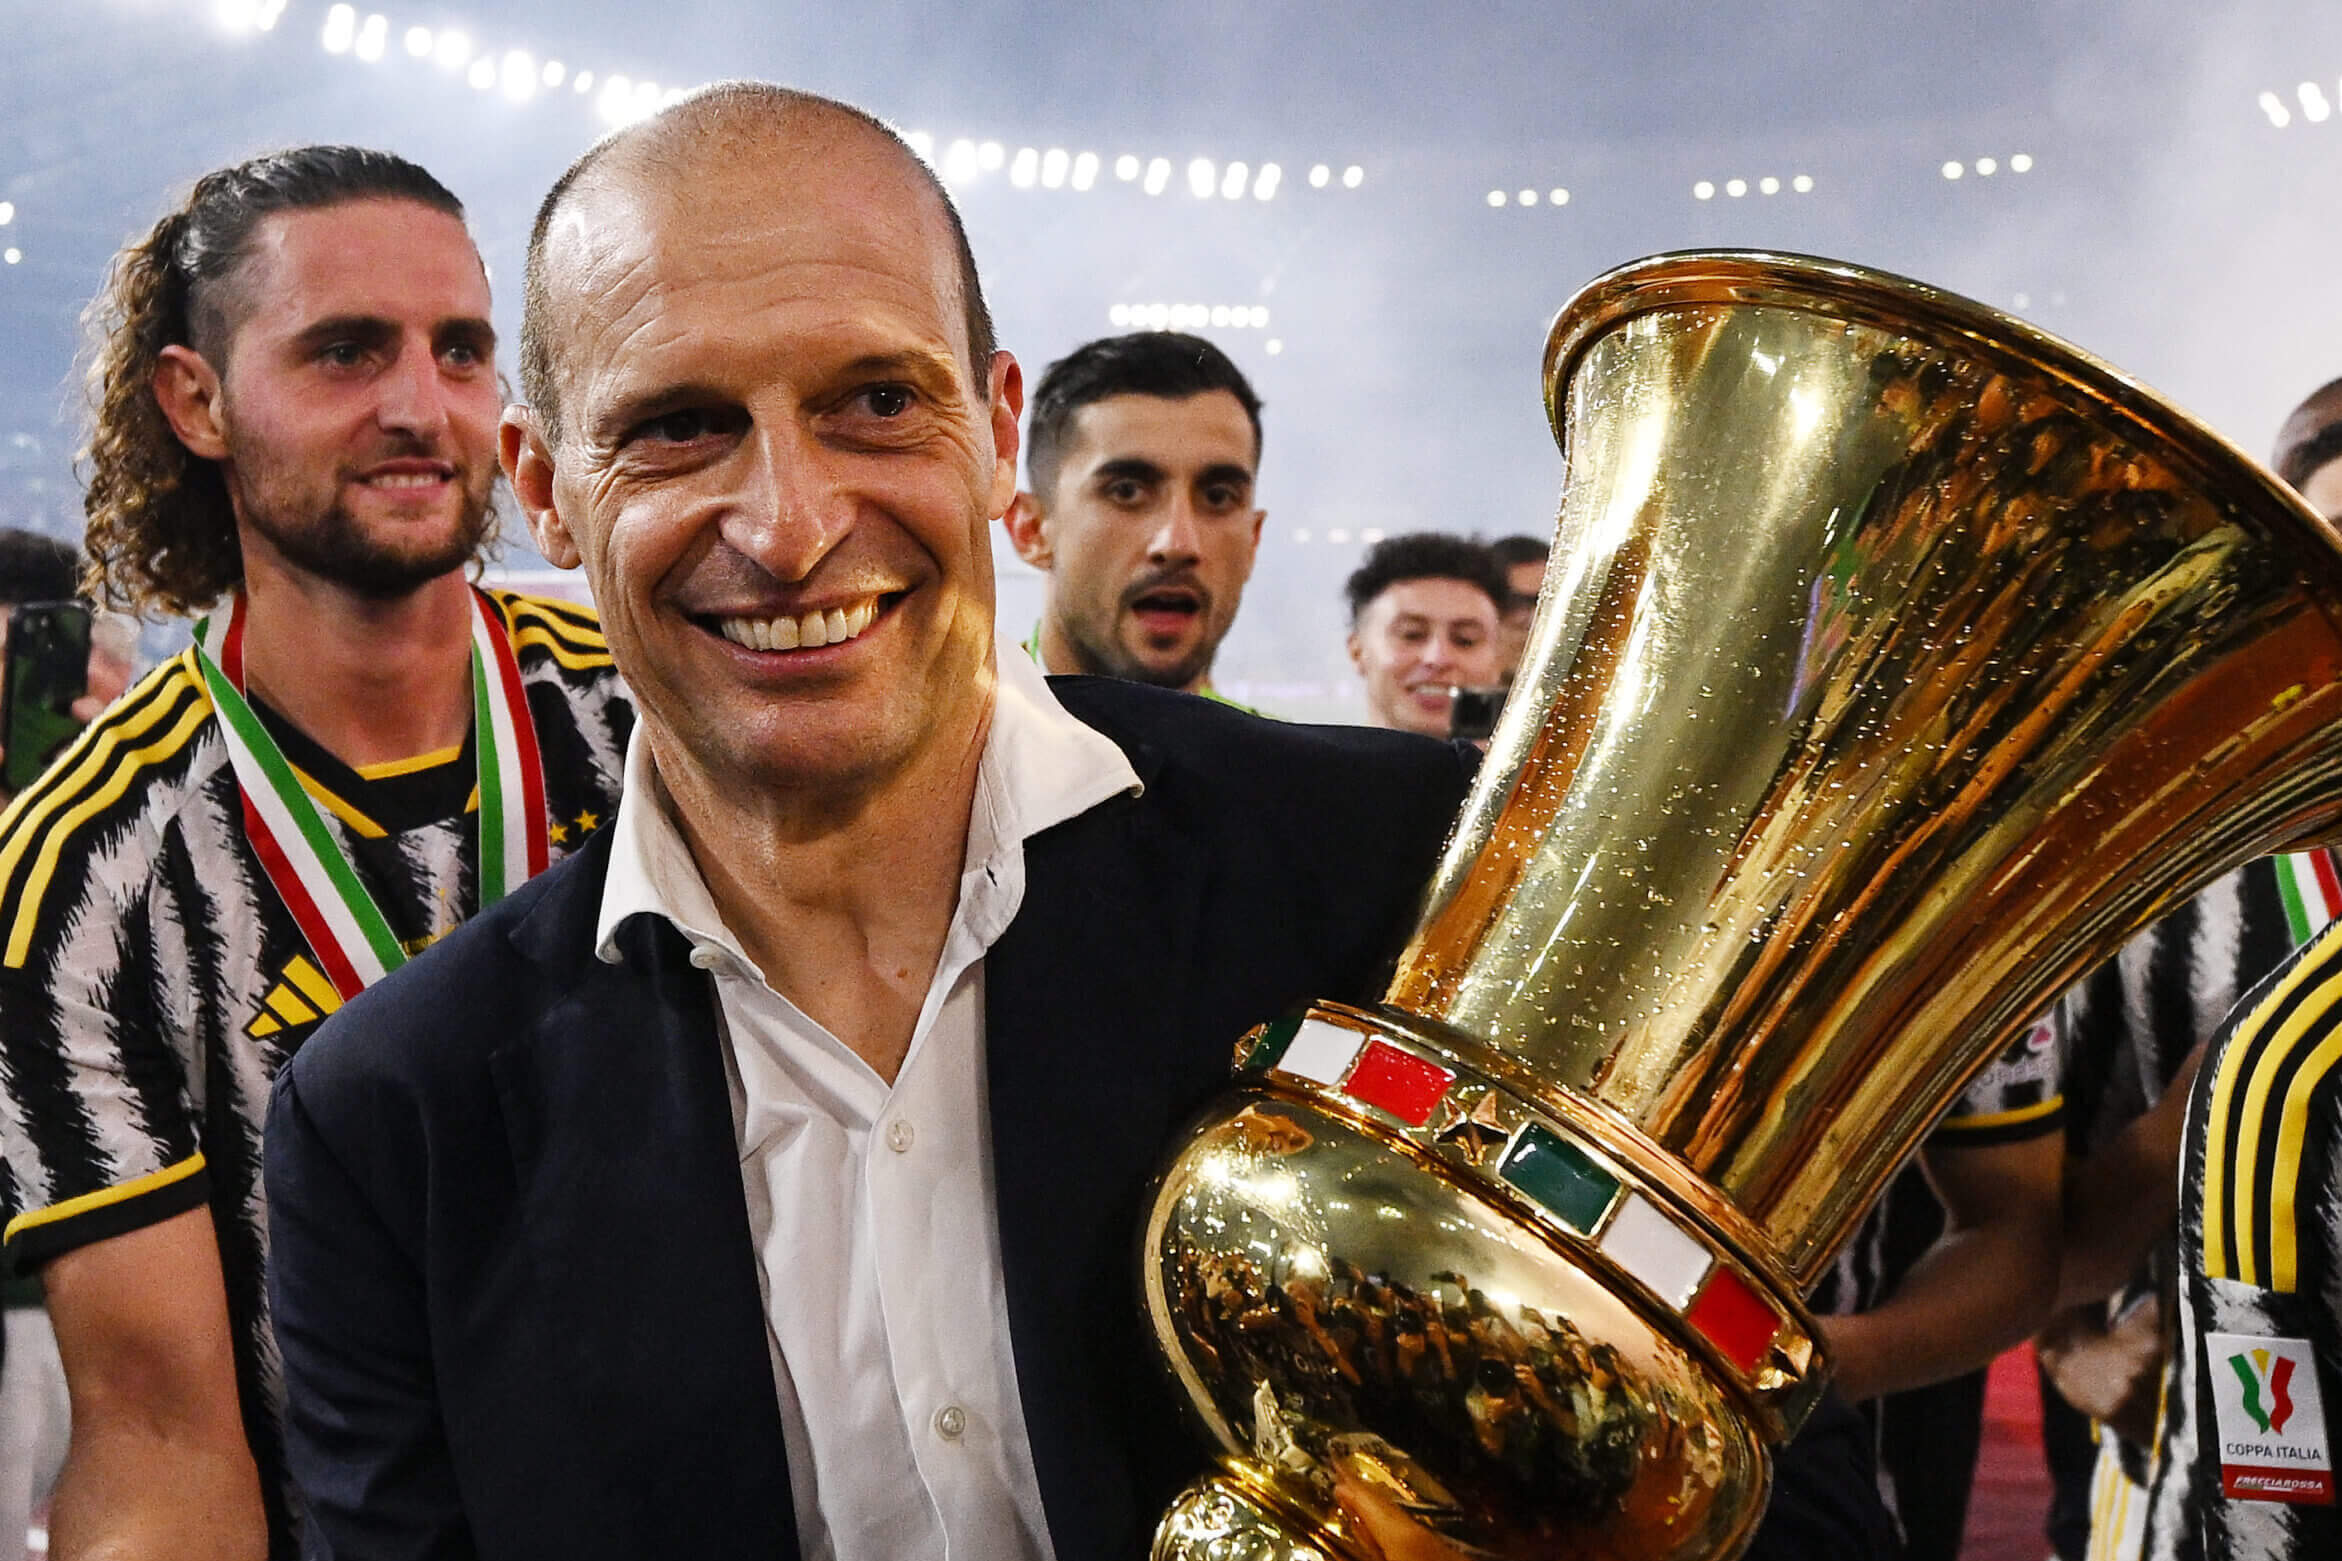 Coppa Italia win has Massimiliano Allegri contemplating a bittersweet Juventus goodbye